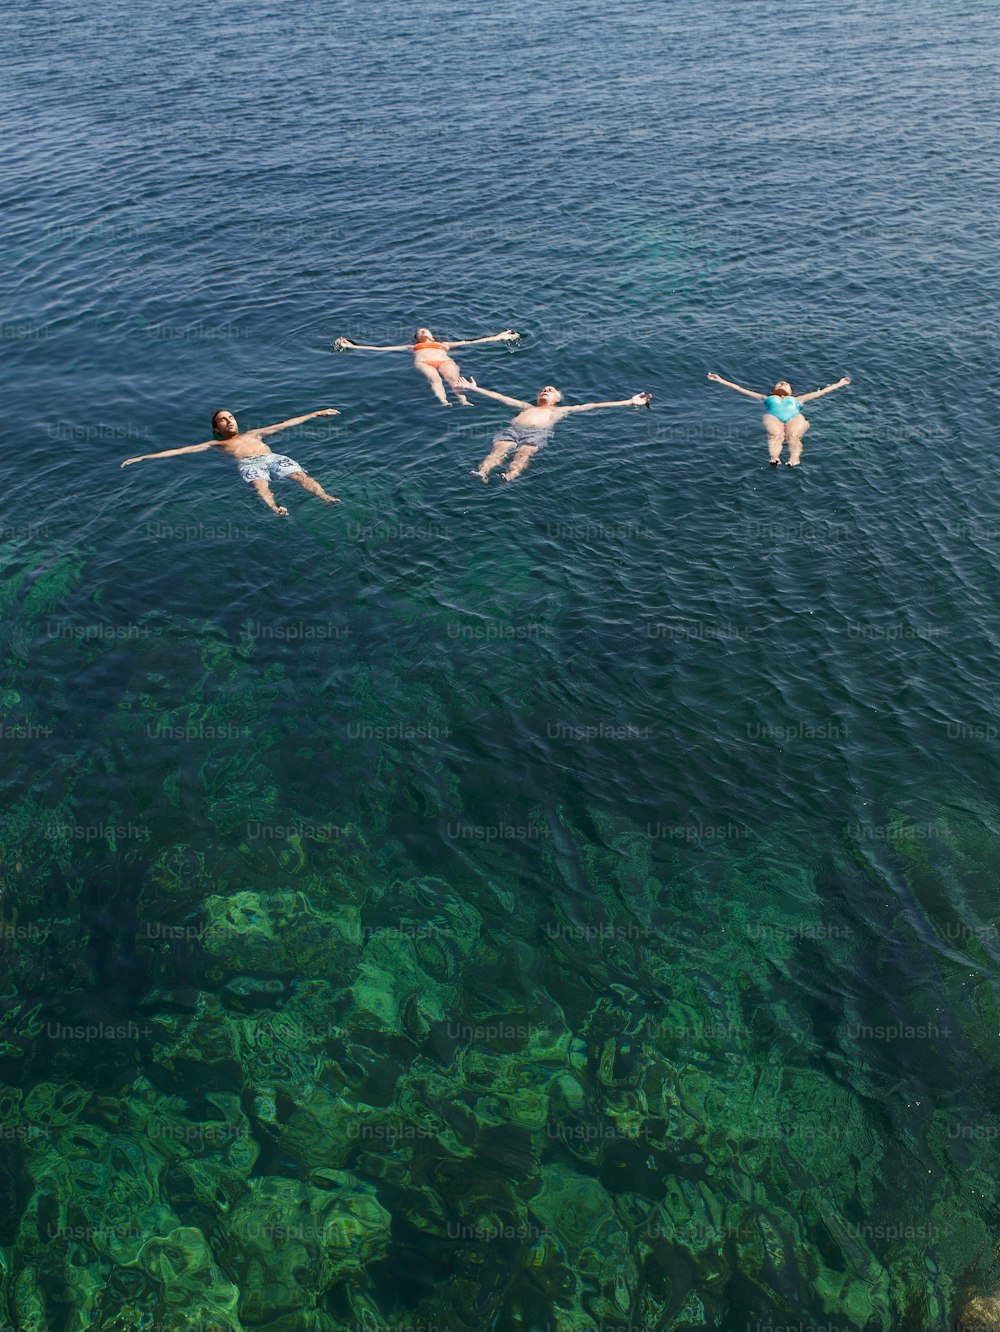 Un grupo de personas flotando sobre un cuerpo de agua